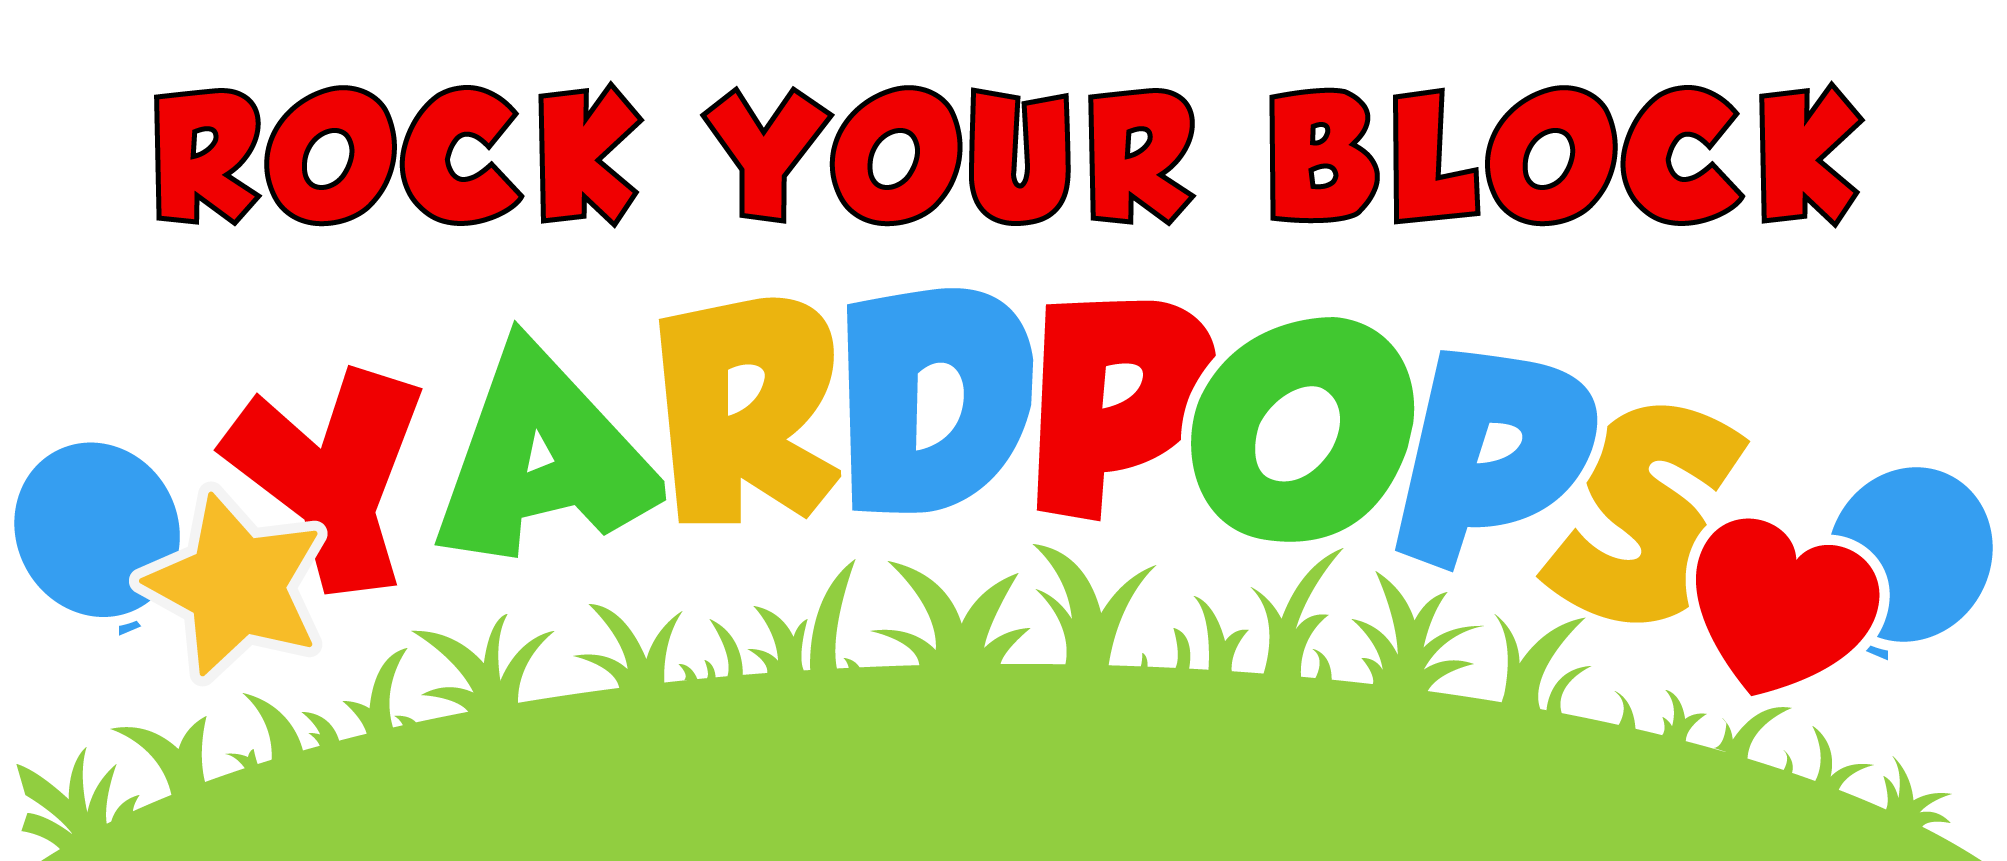 rockyourblockyardpops-home-page-logo